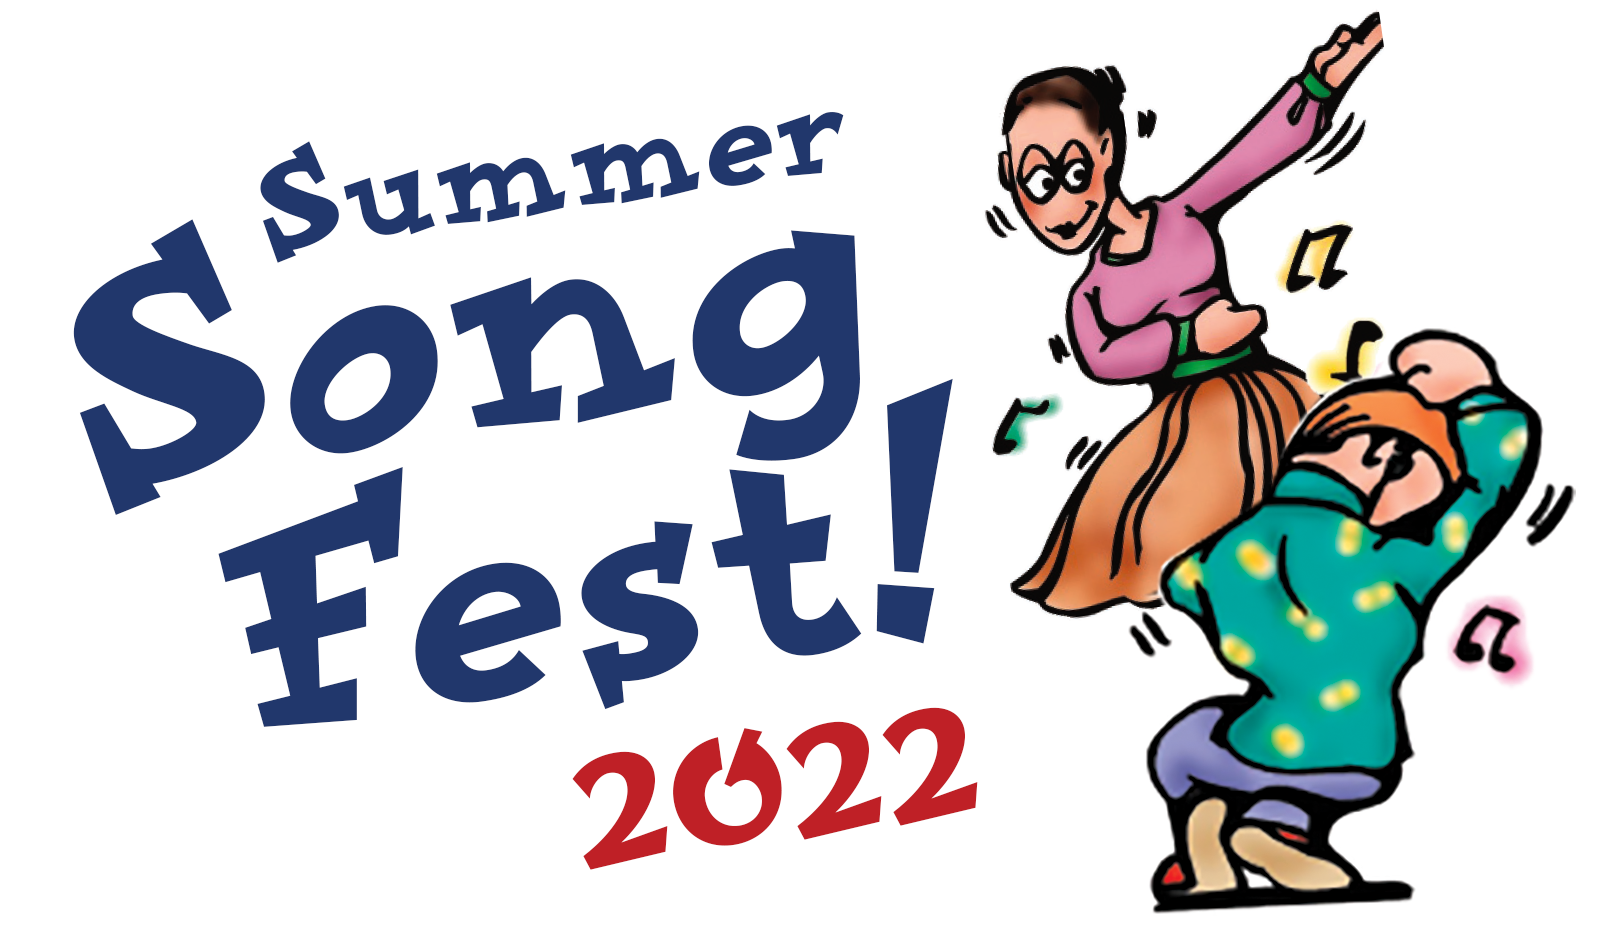 songfest logo